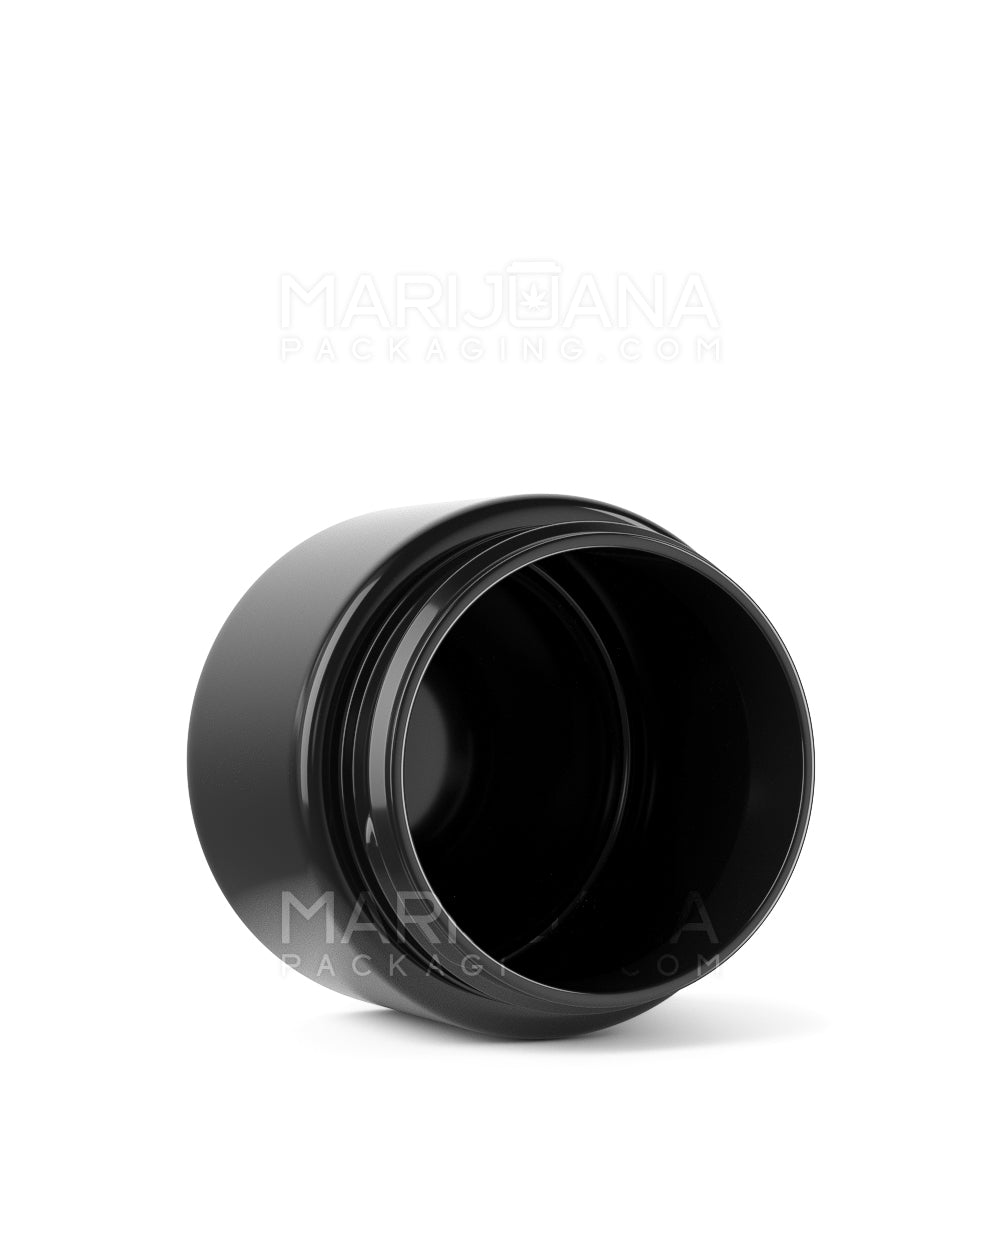 Straight Sided Black Plastic Jars | 53mm - 3oz - 100 Count - 3